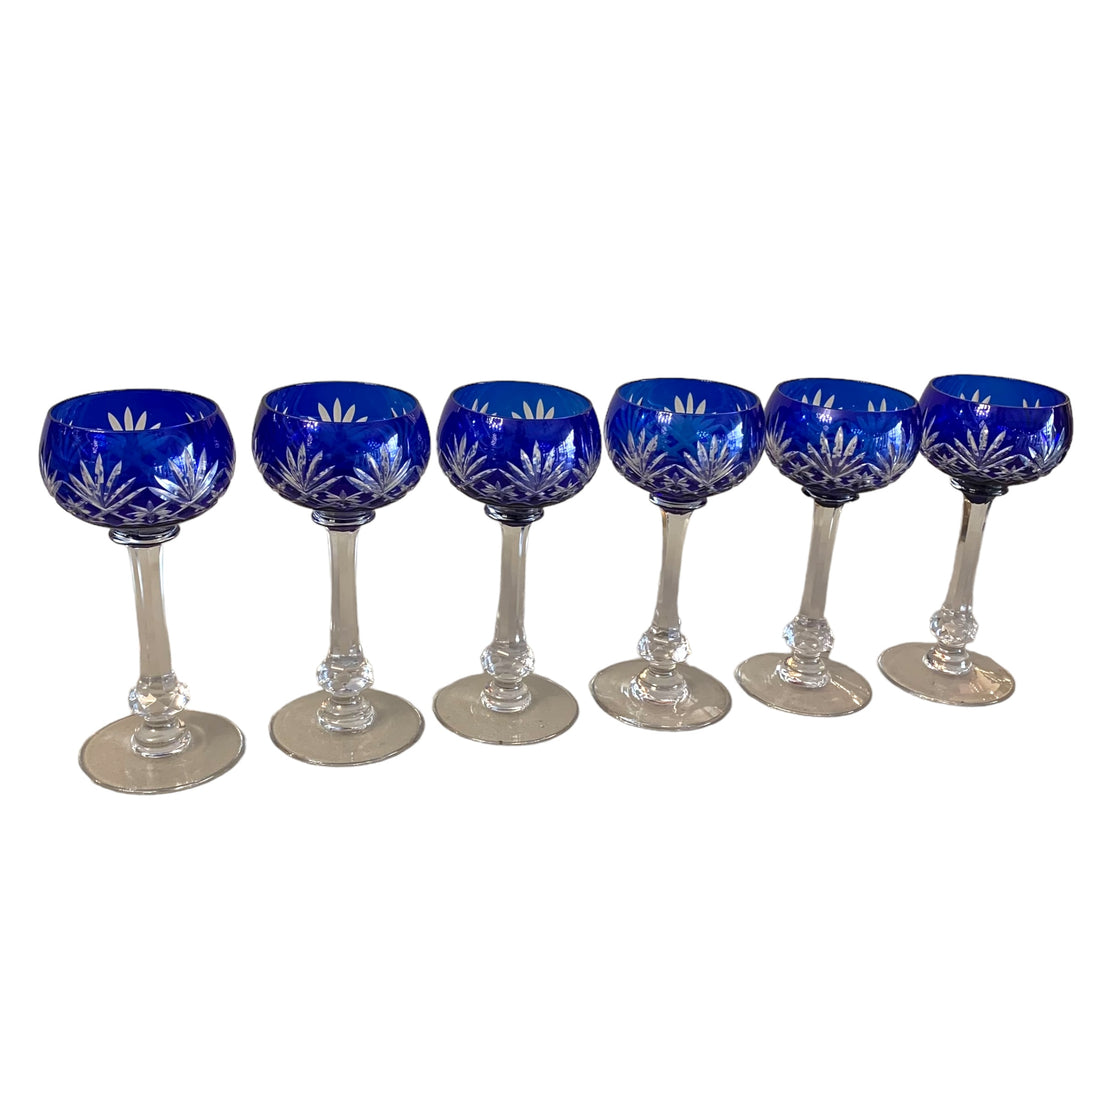 Set de 6 copas francesa azules cristal cortado. Año 1950